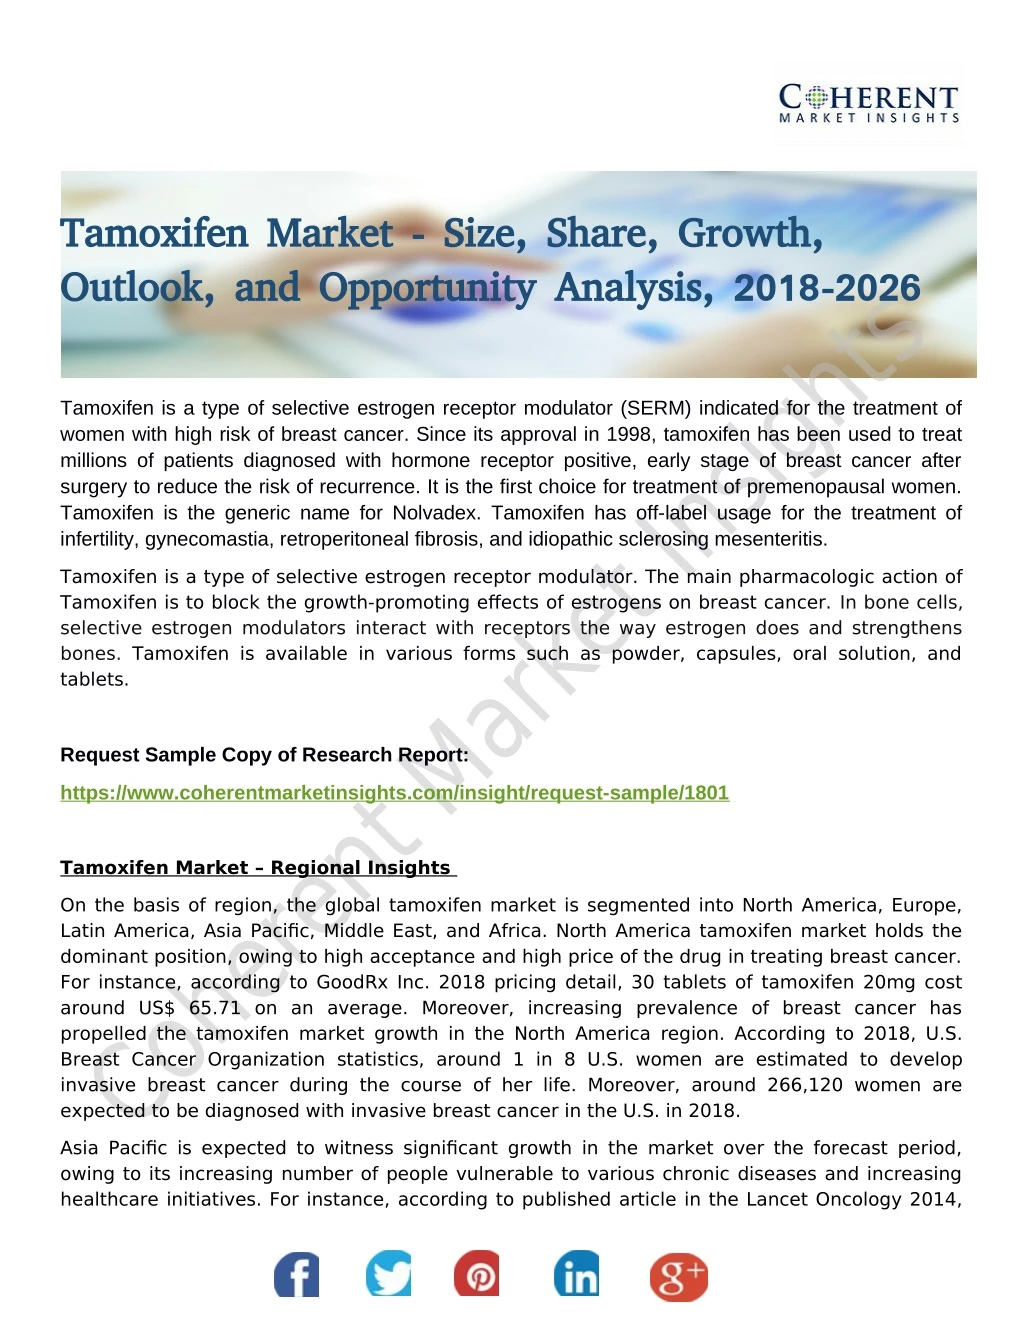 tamoxifen market size share growth tamoxifen